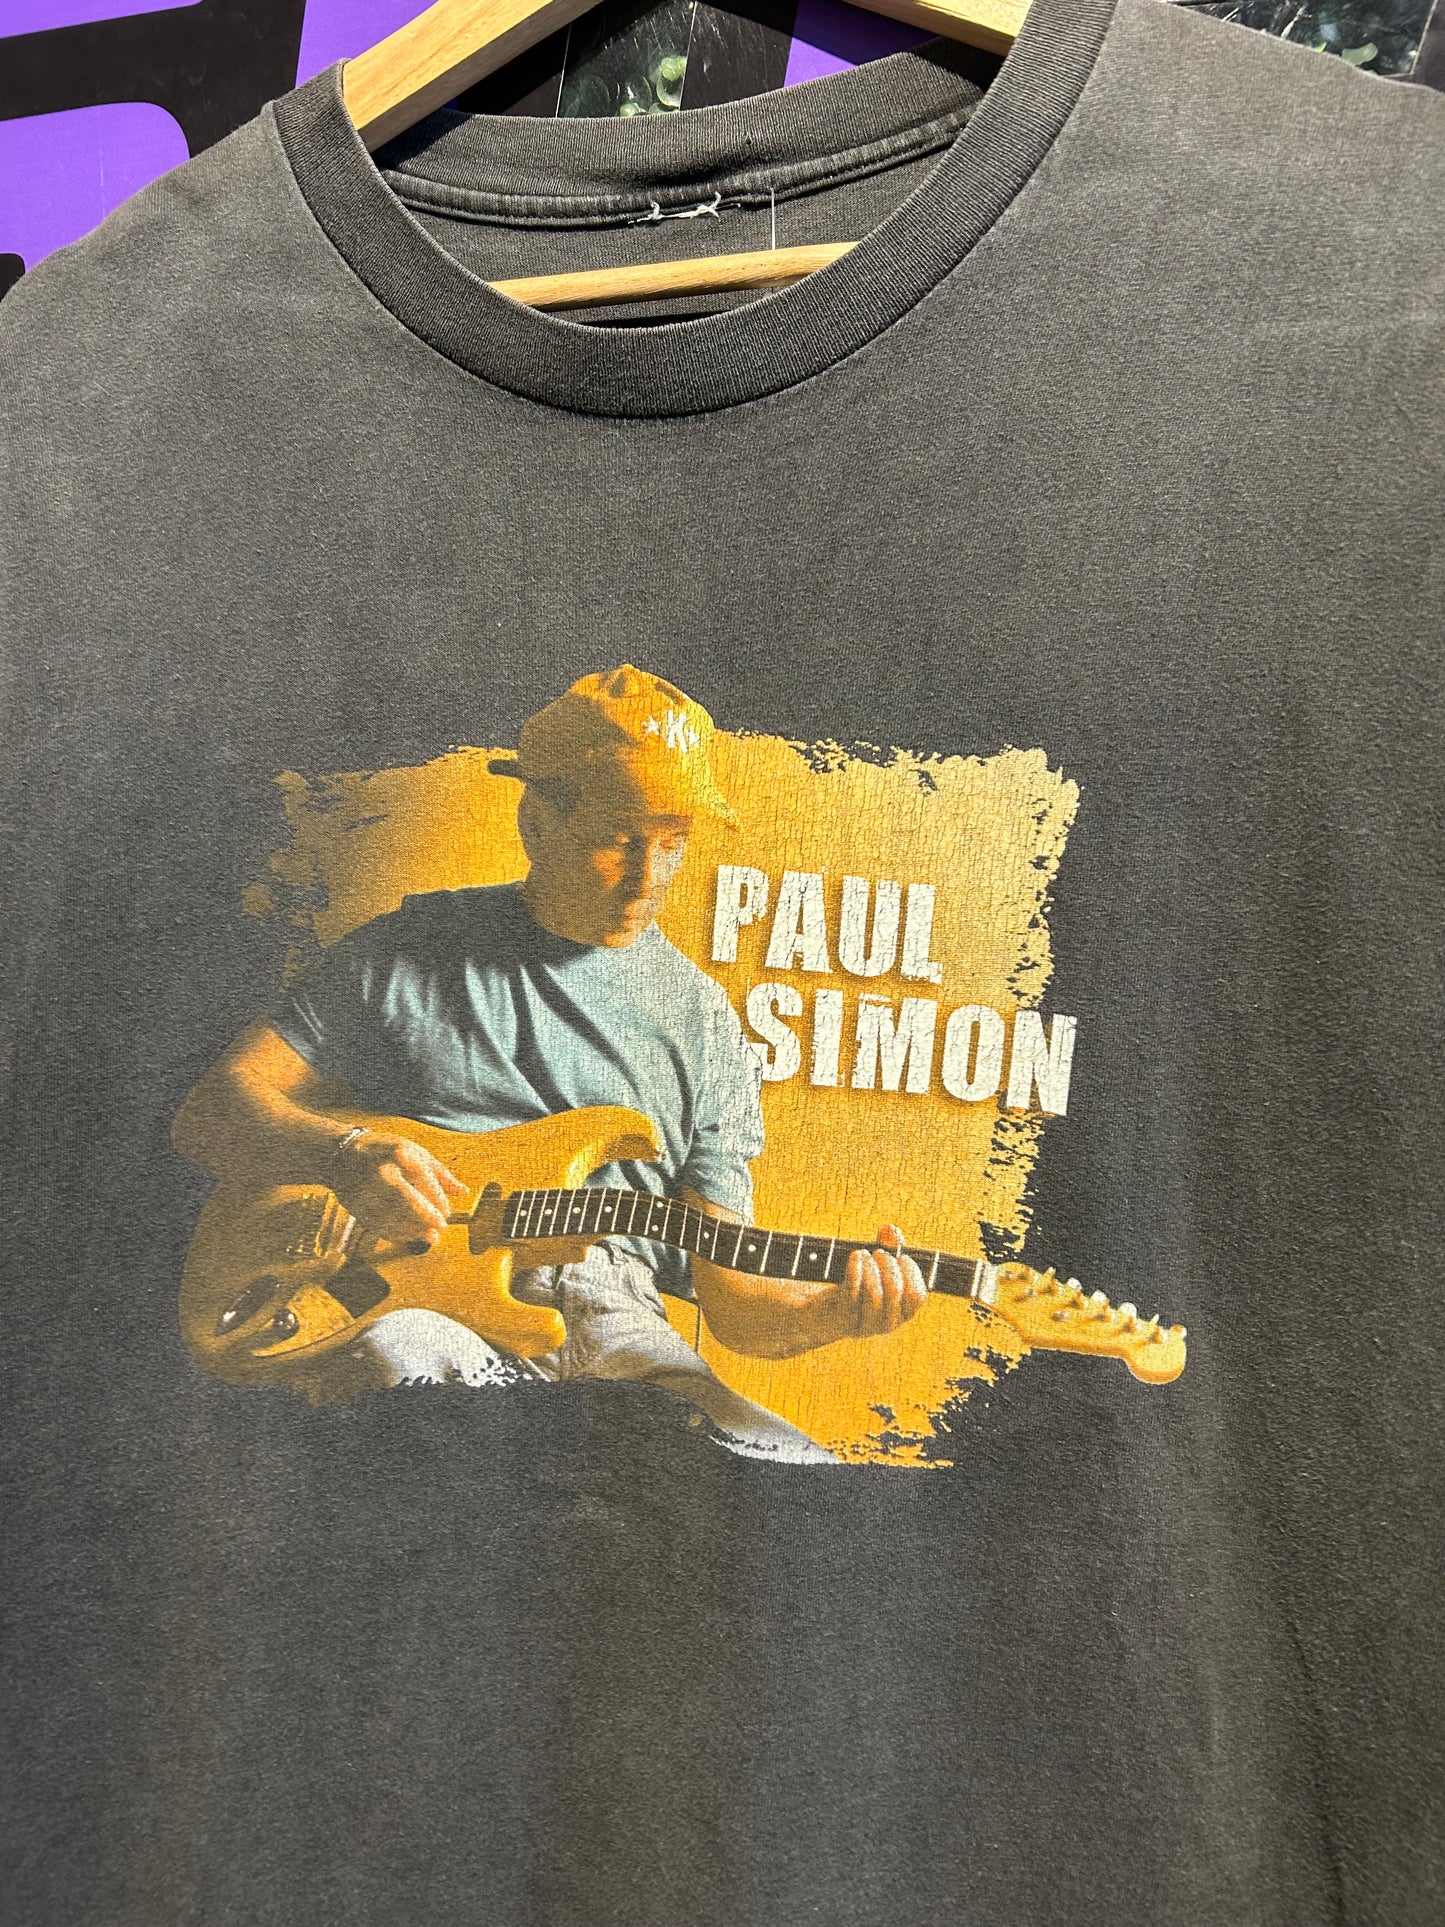 2001 Paul Simon Tour T-Shirt. Size XL